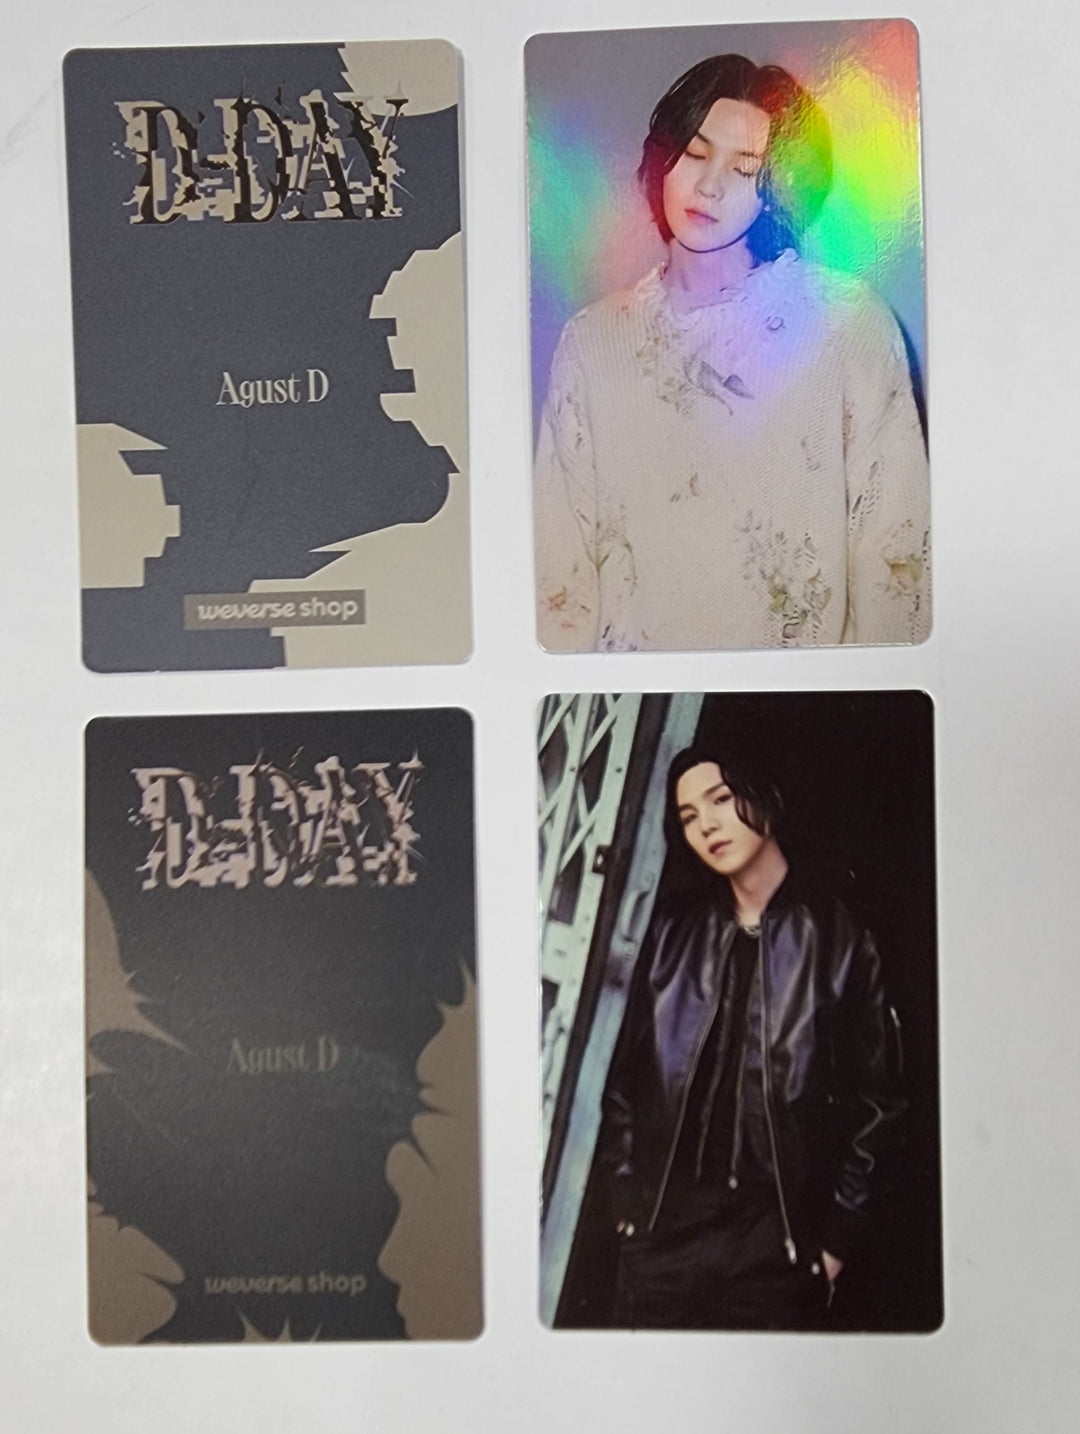 Agust D (Of BTS) "D-DAY" - Weverse Shop Pre-Order Benefit Hologram Photocard